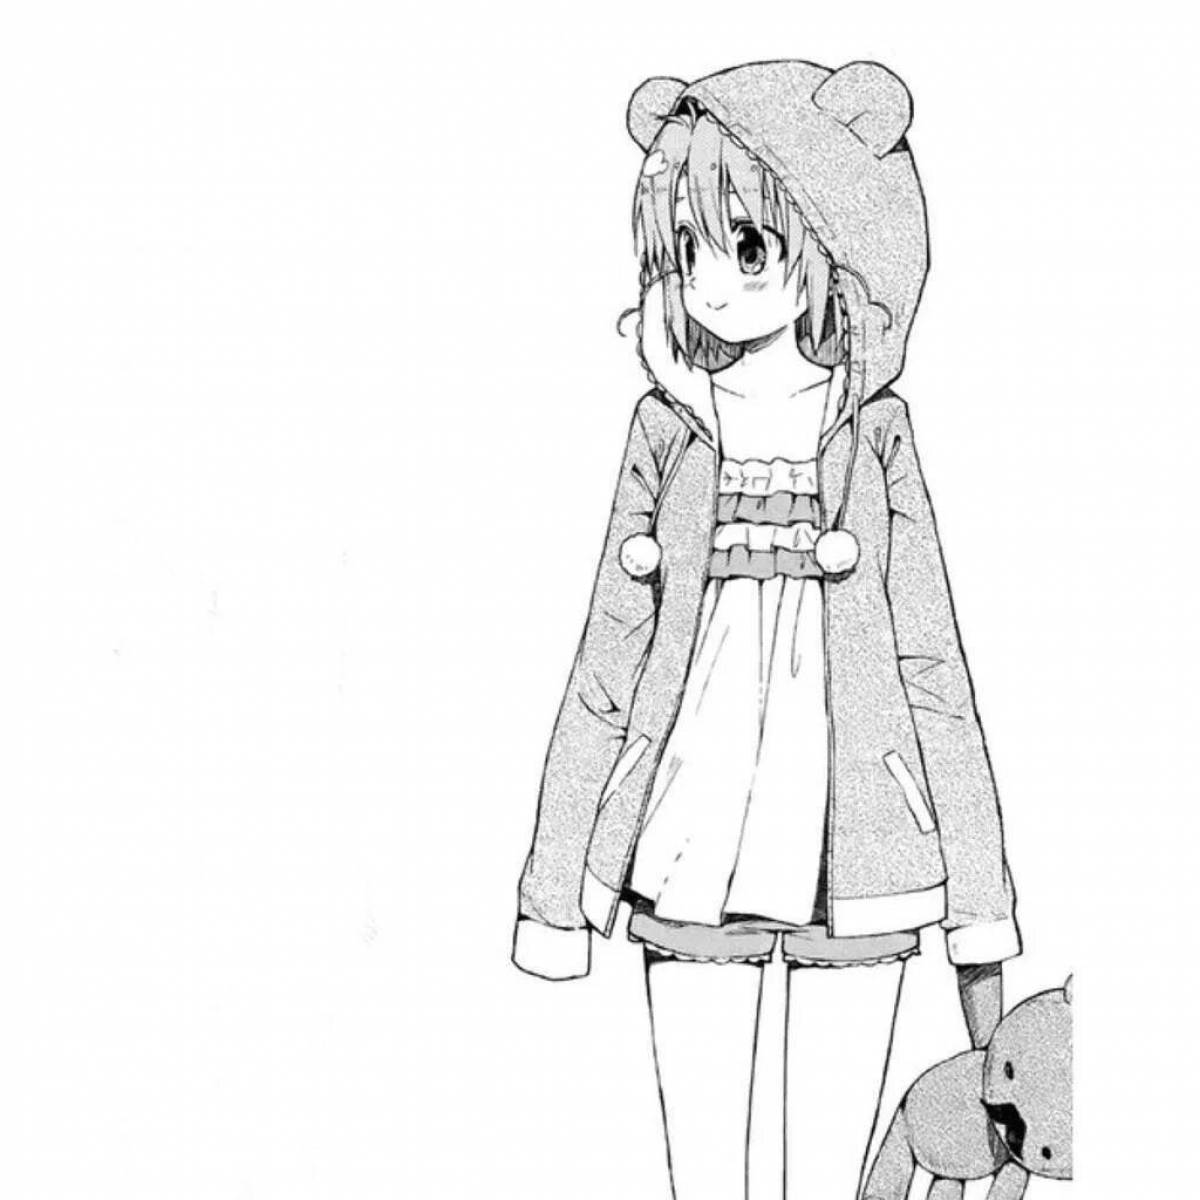 Adorable full length anime girl coloring book